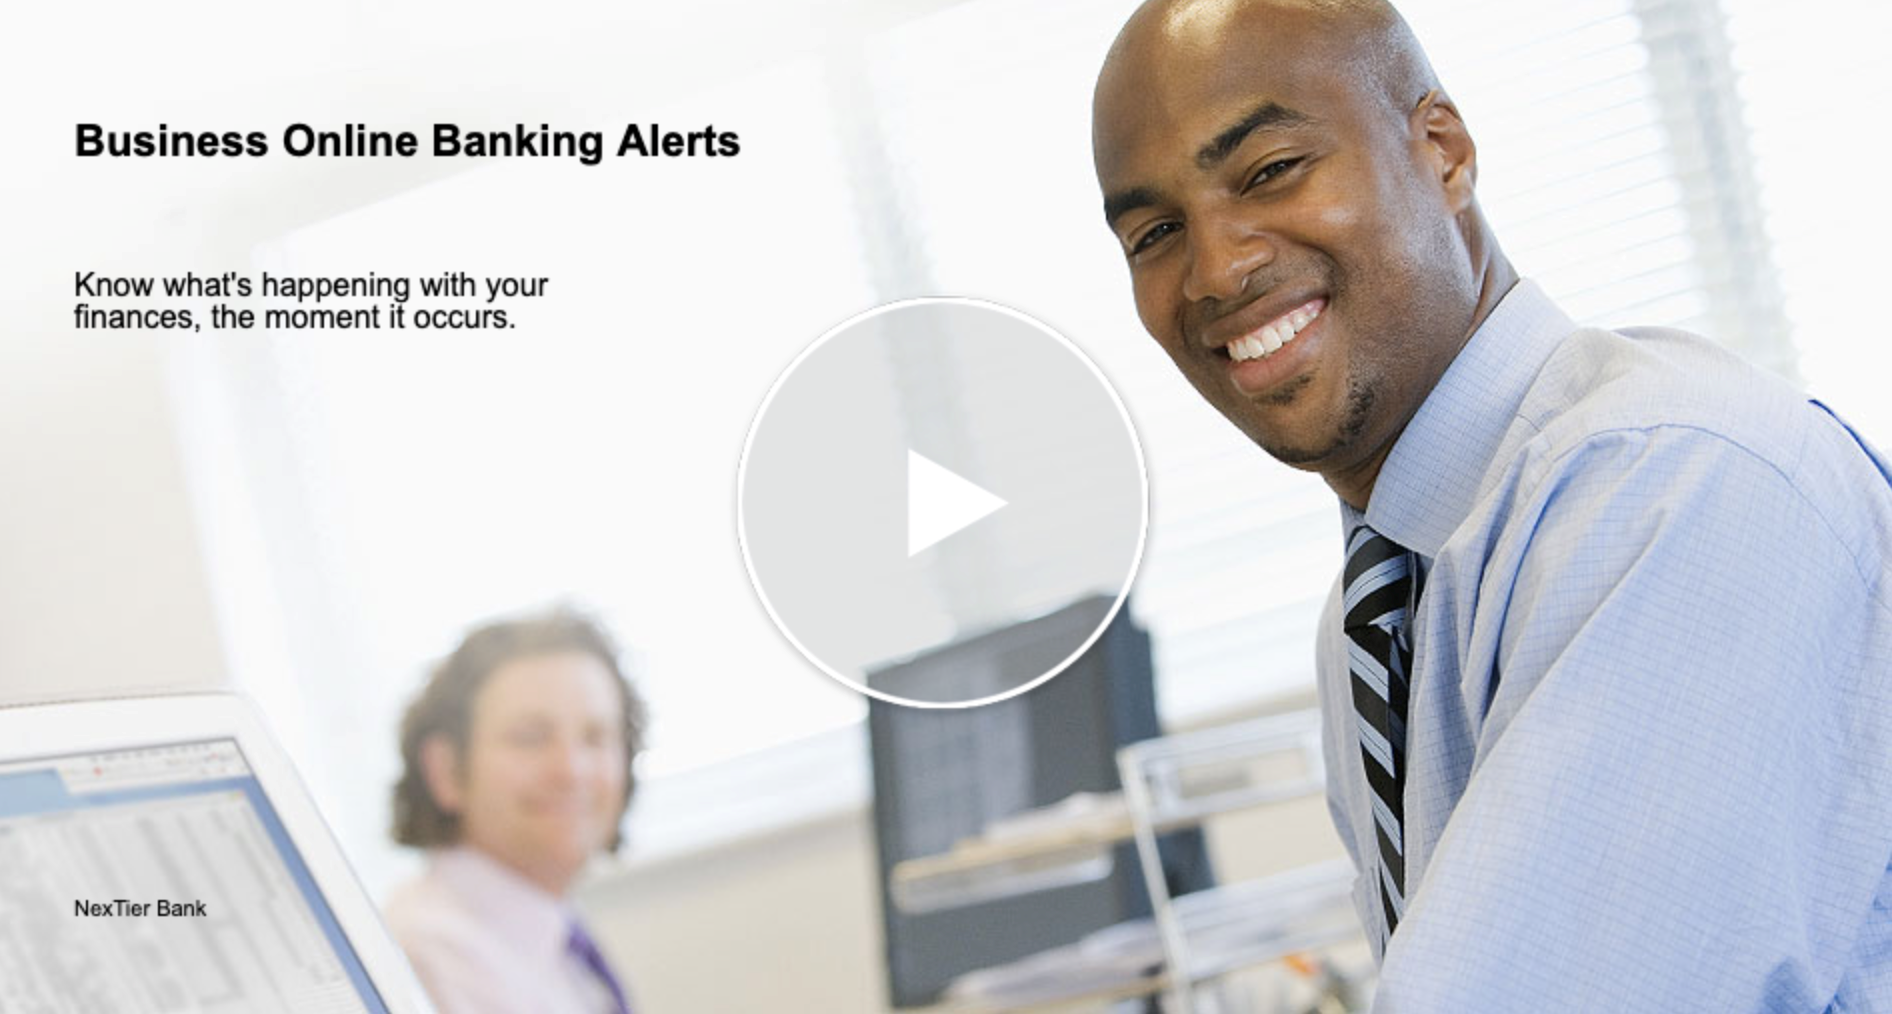 Business Online Banking Alerts